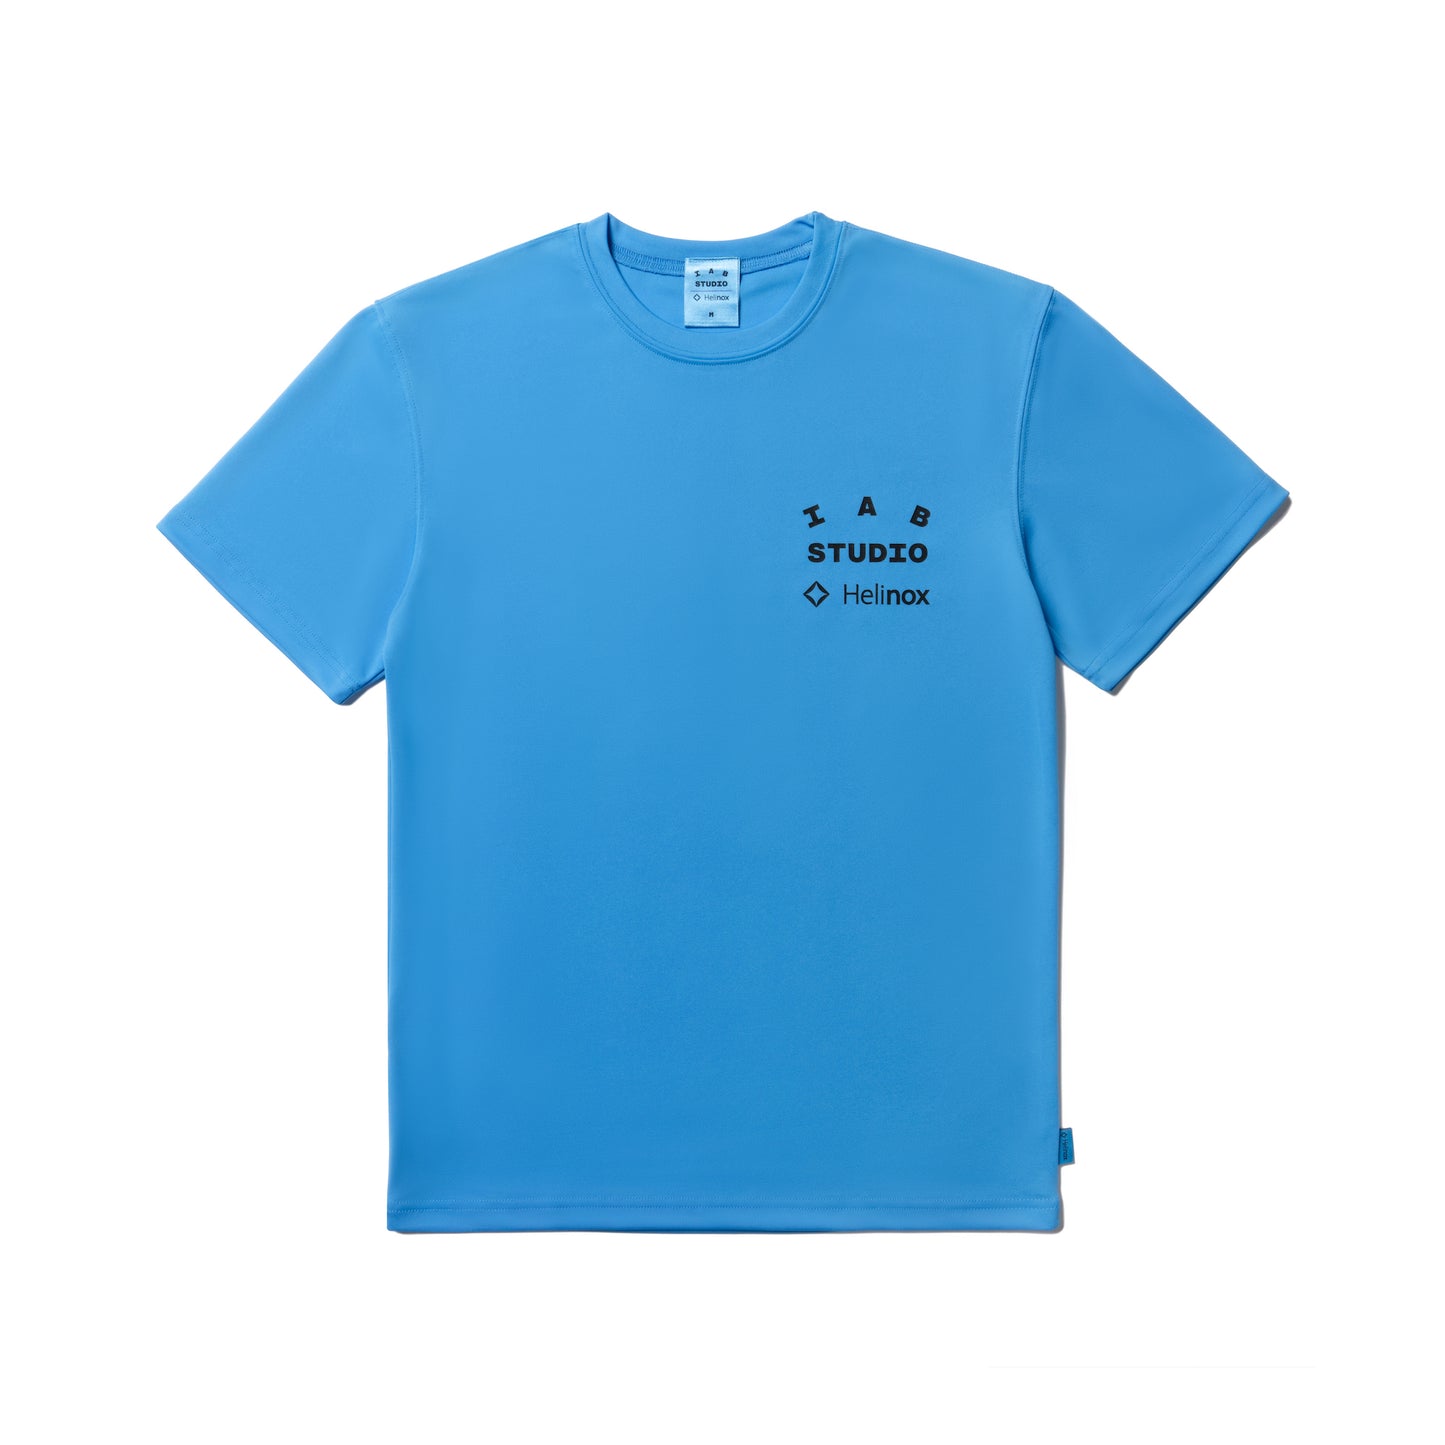 IAB STUDIO x Helinox T-Shirt - Cyan Blue